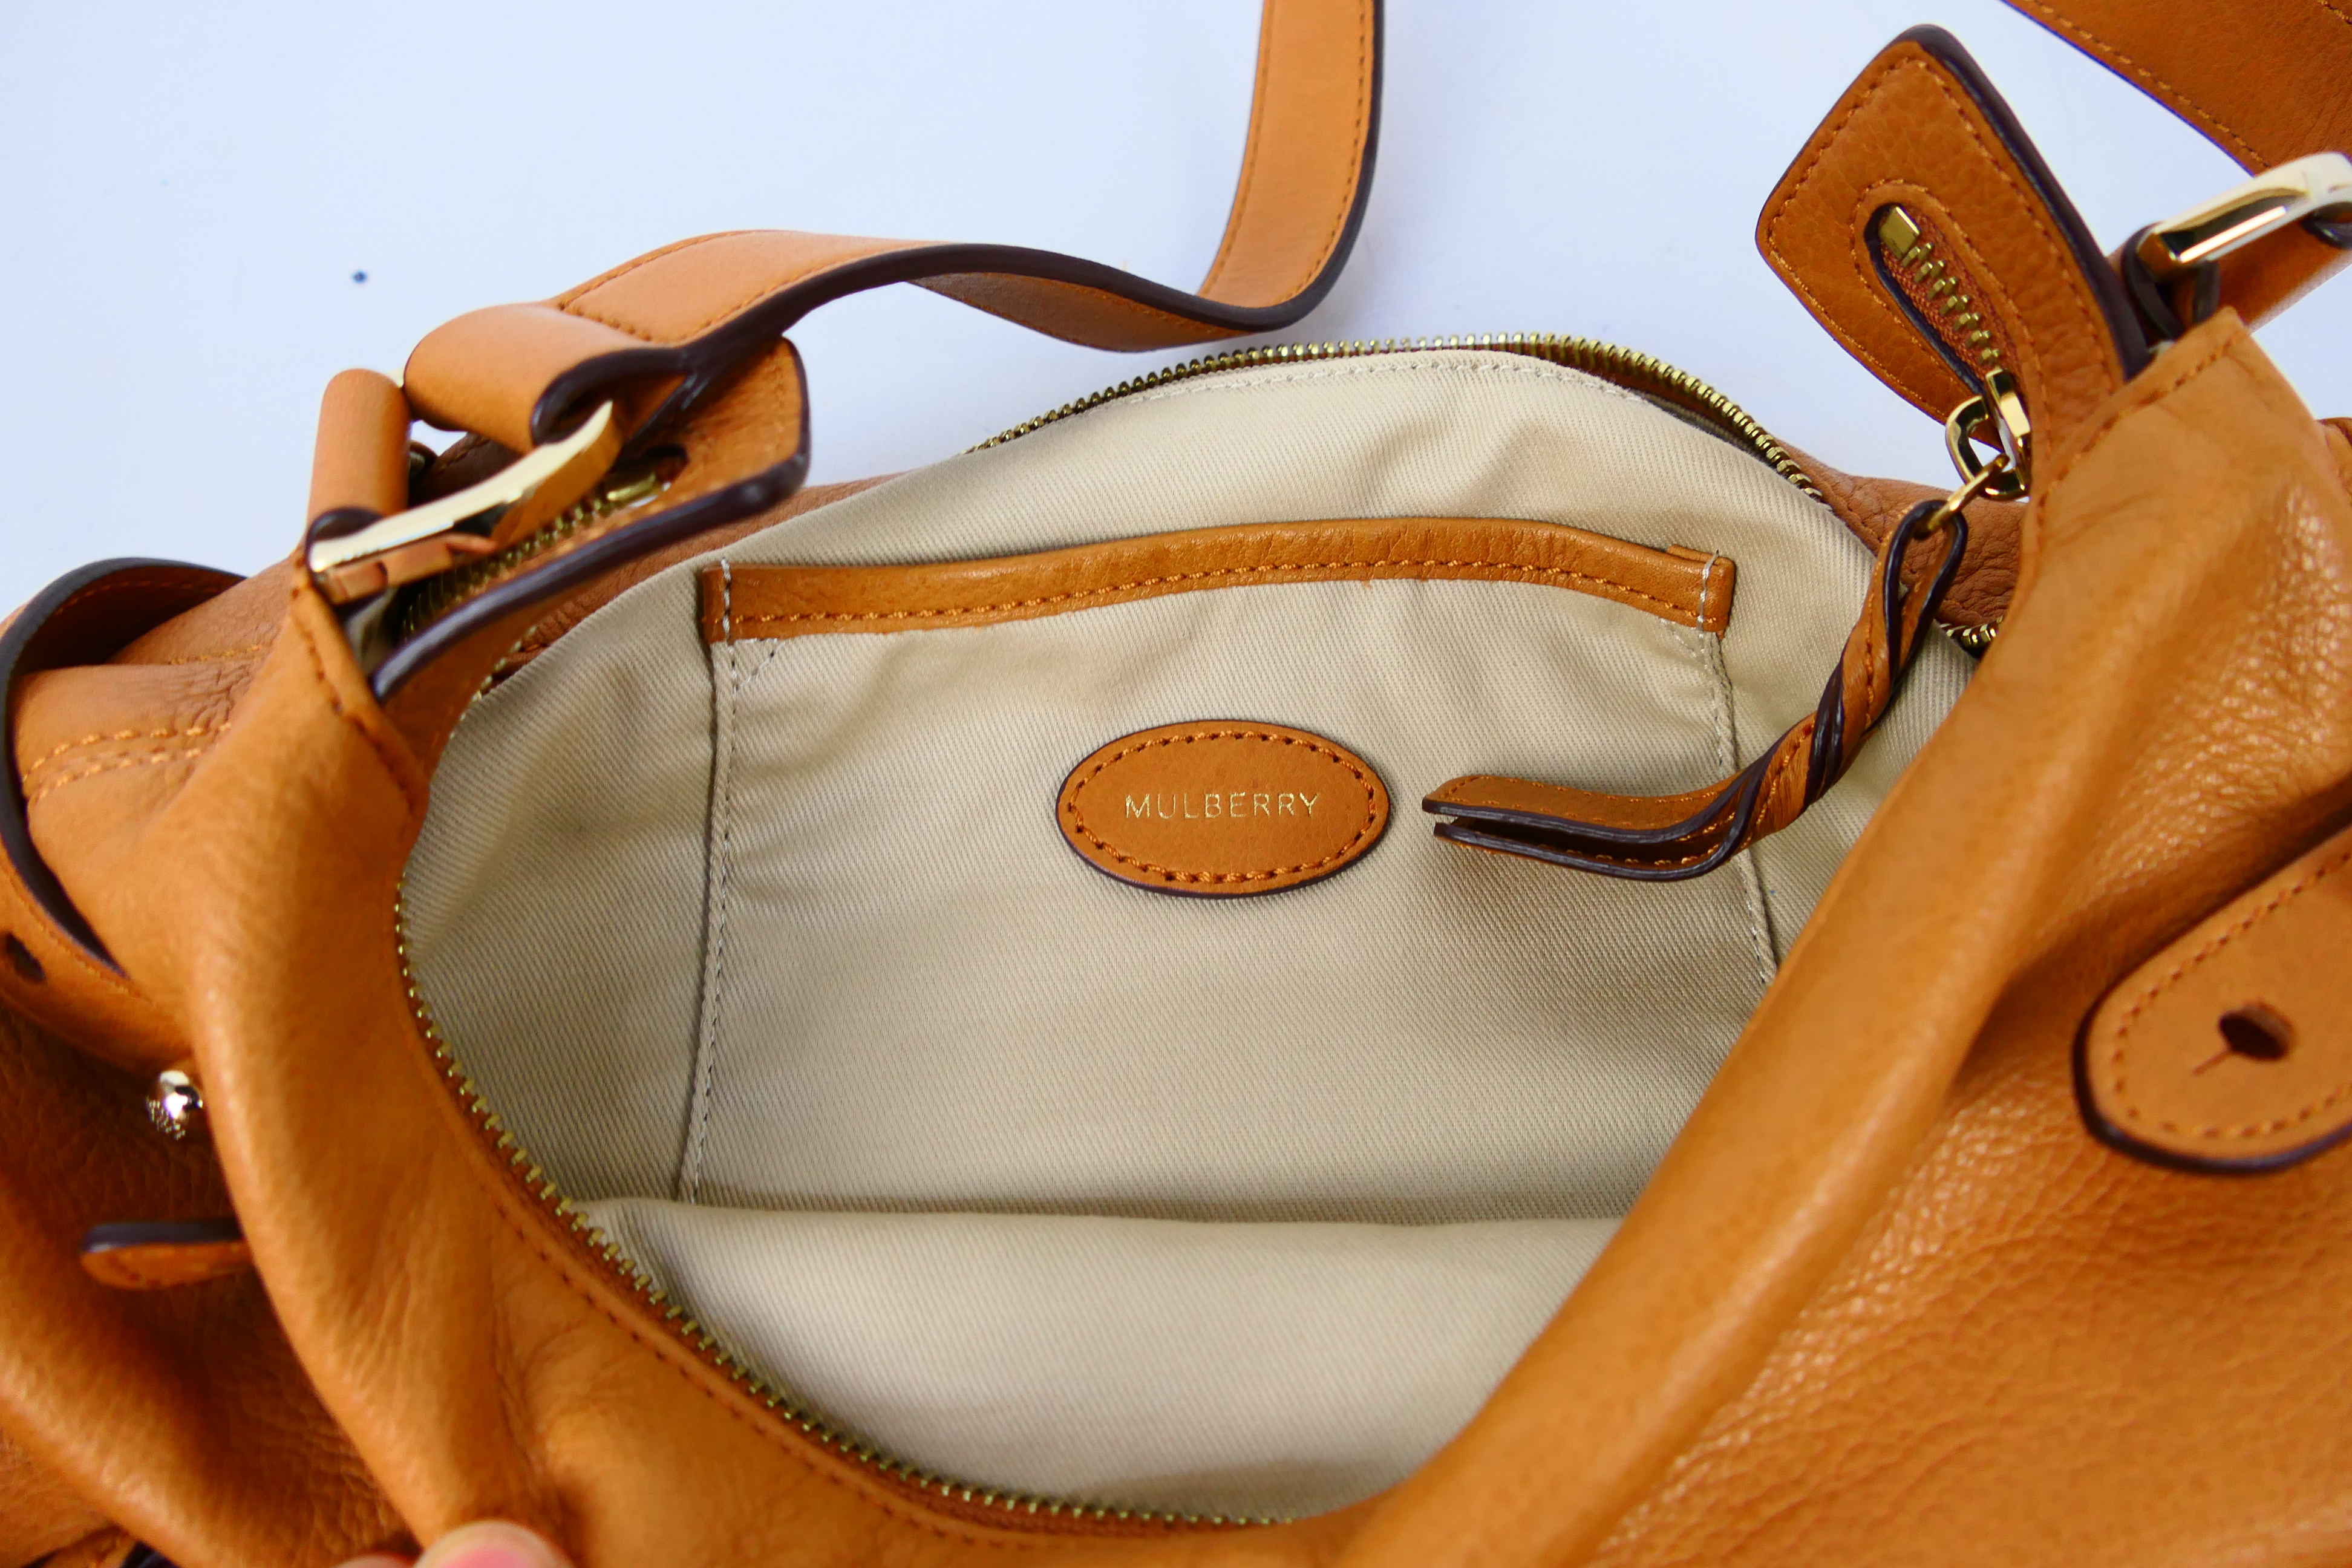 Mulberry - A chestnut Mulberry leather shoulder bag - Shoulder bag has one interior zip pocket and - Image 7 of 8